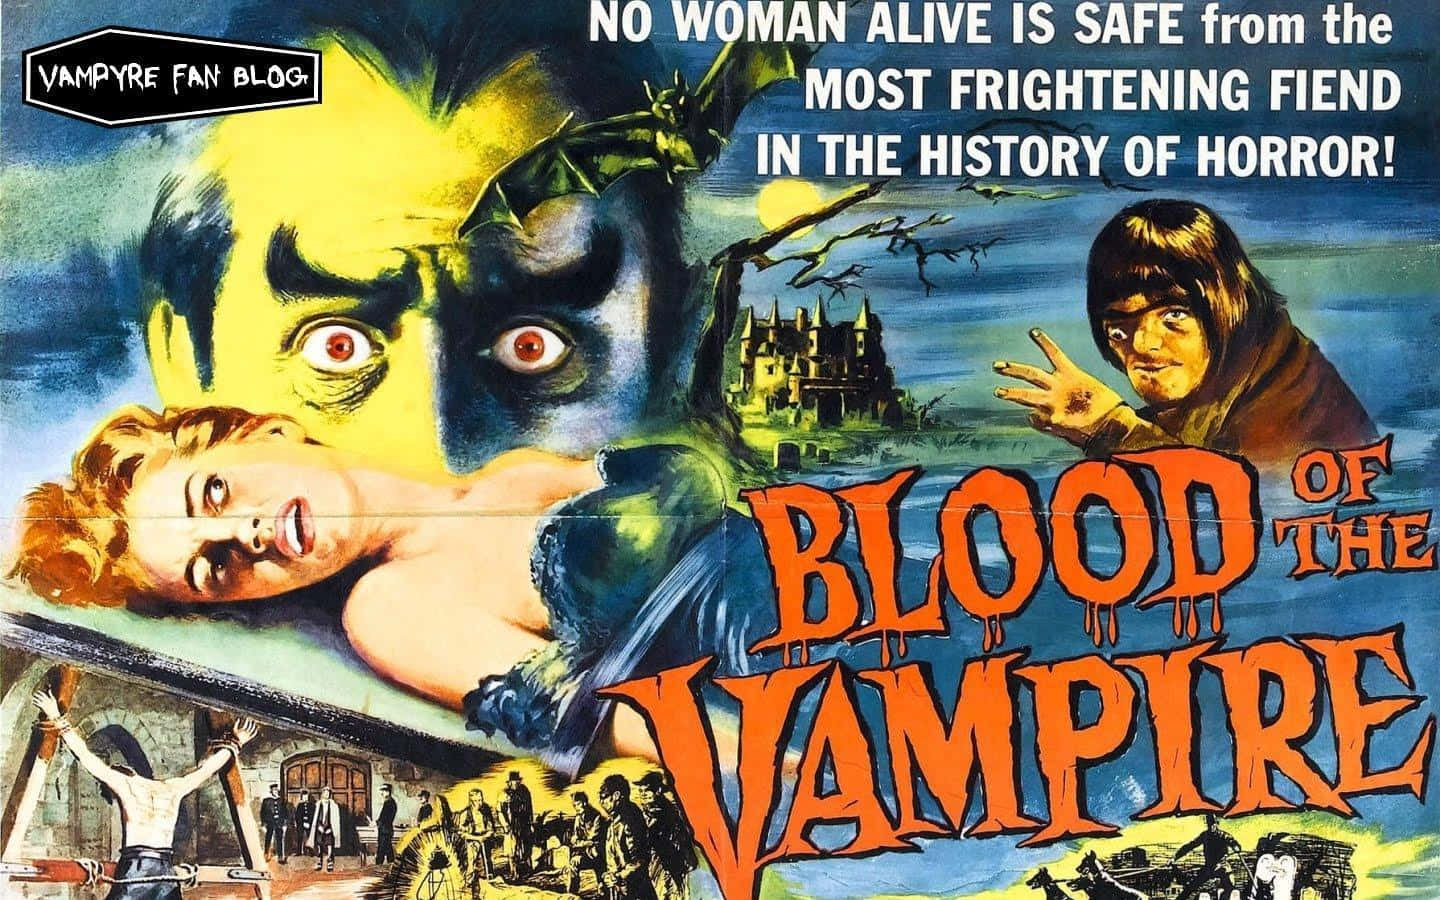 Vampyrensblod